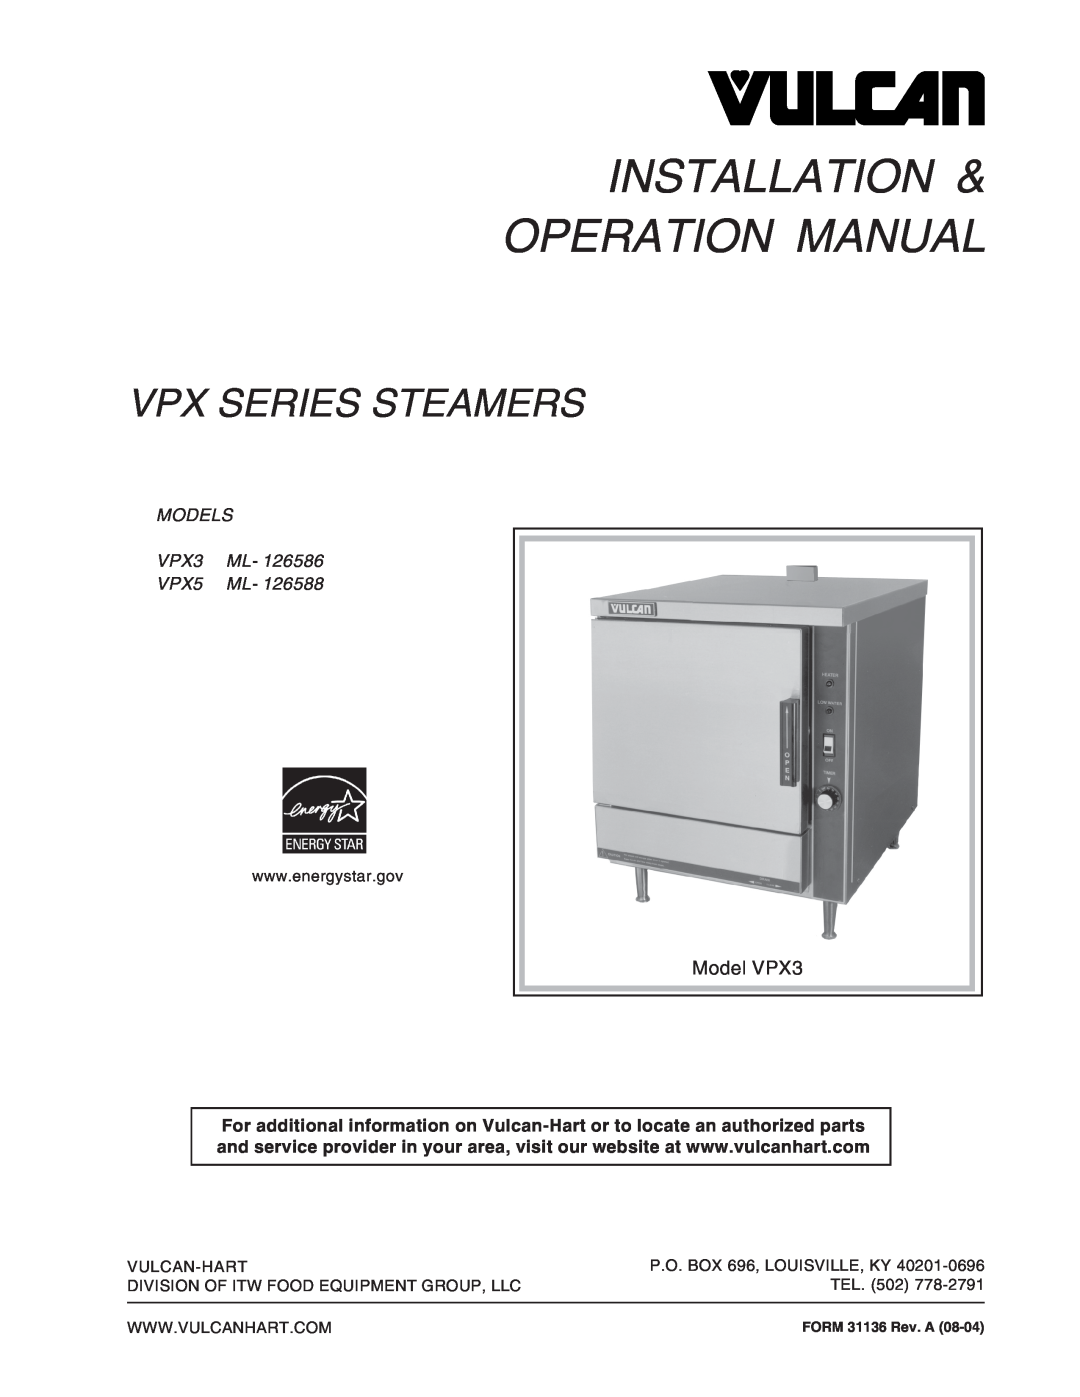 Vulcan-Hart operation manual Vpx Series Steamers, MODELS VPX3 ML- VPX5 ML, Vulcan-Hart, P.O. BOX 696, LOUISVILLE, KY 